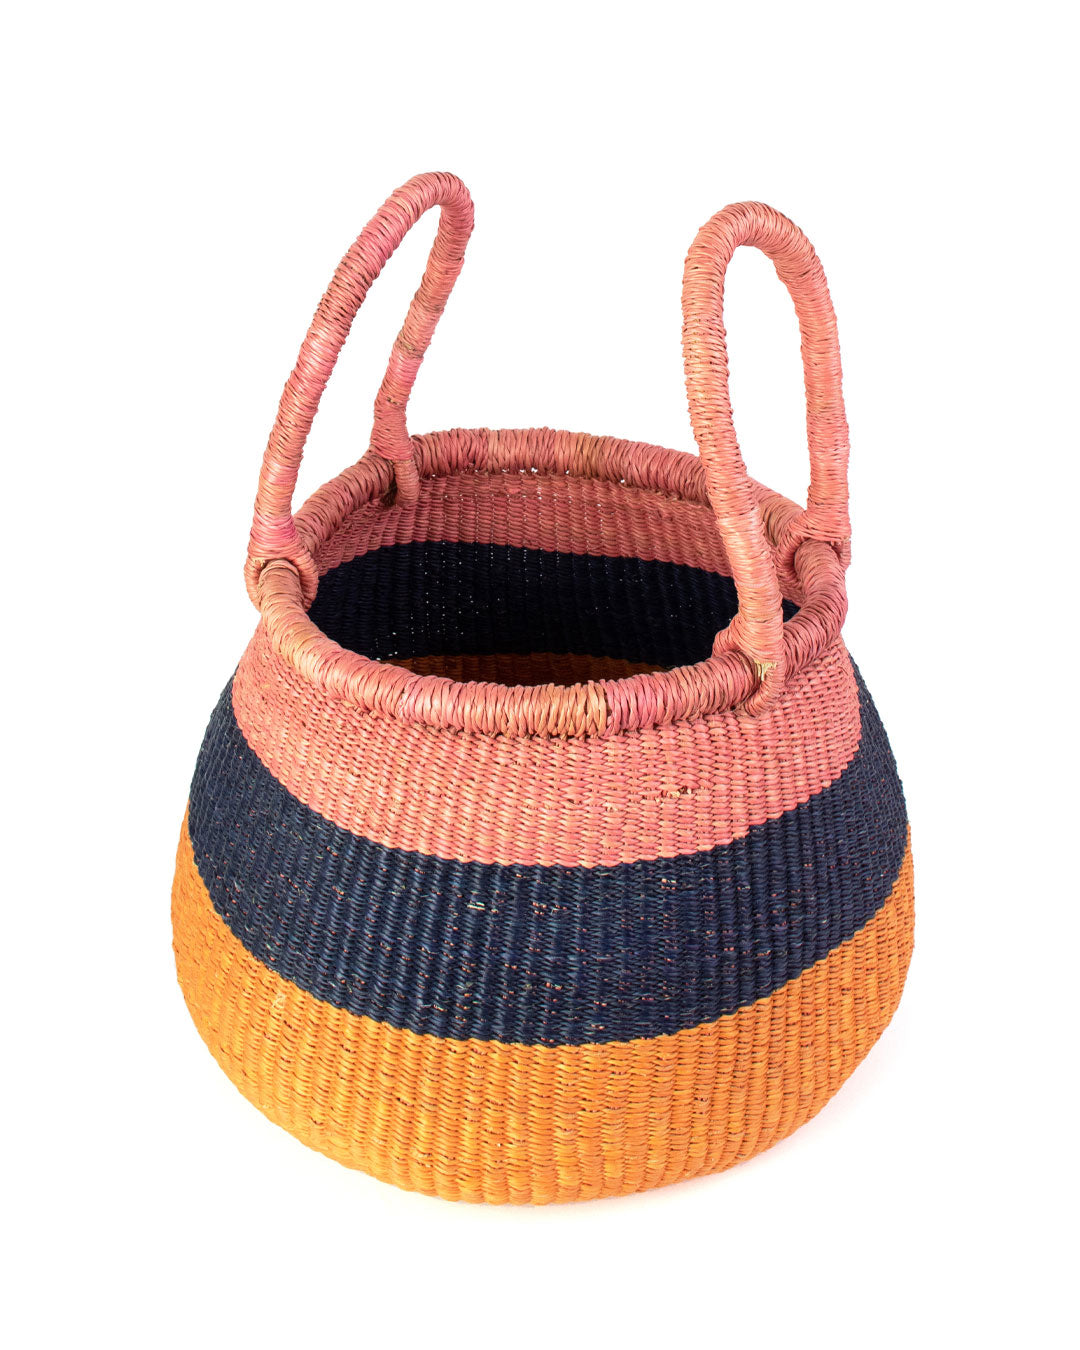 Bolo Colour Block Basket With Handles Aketekete